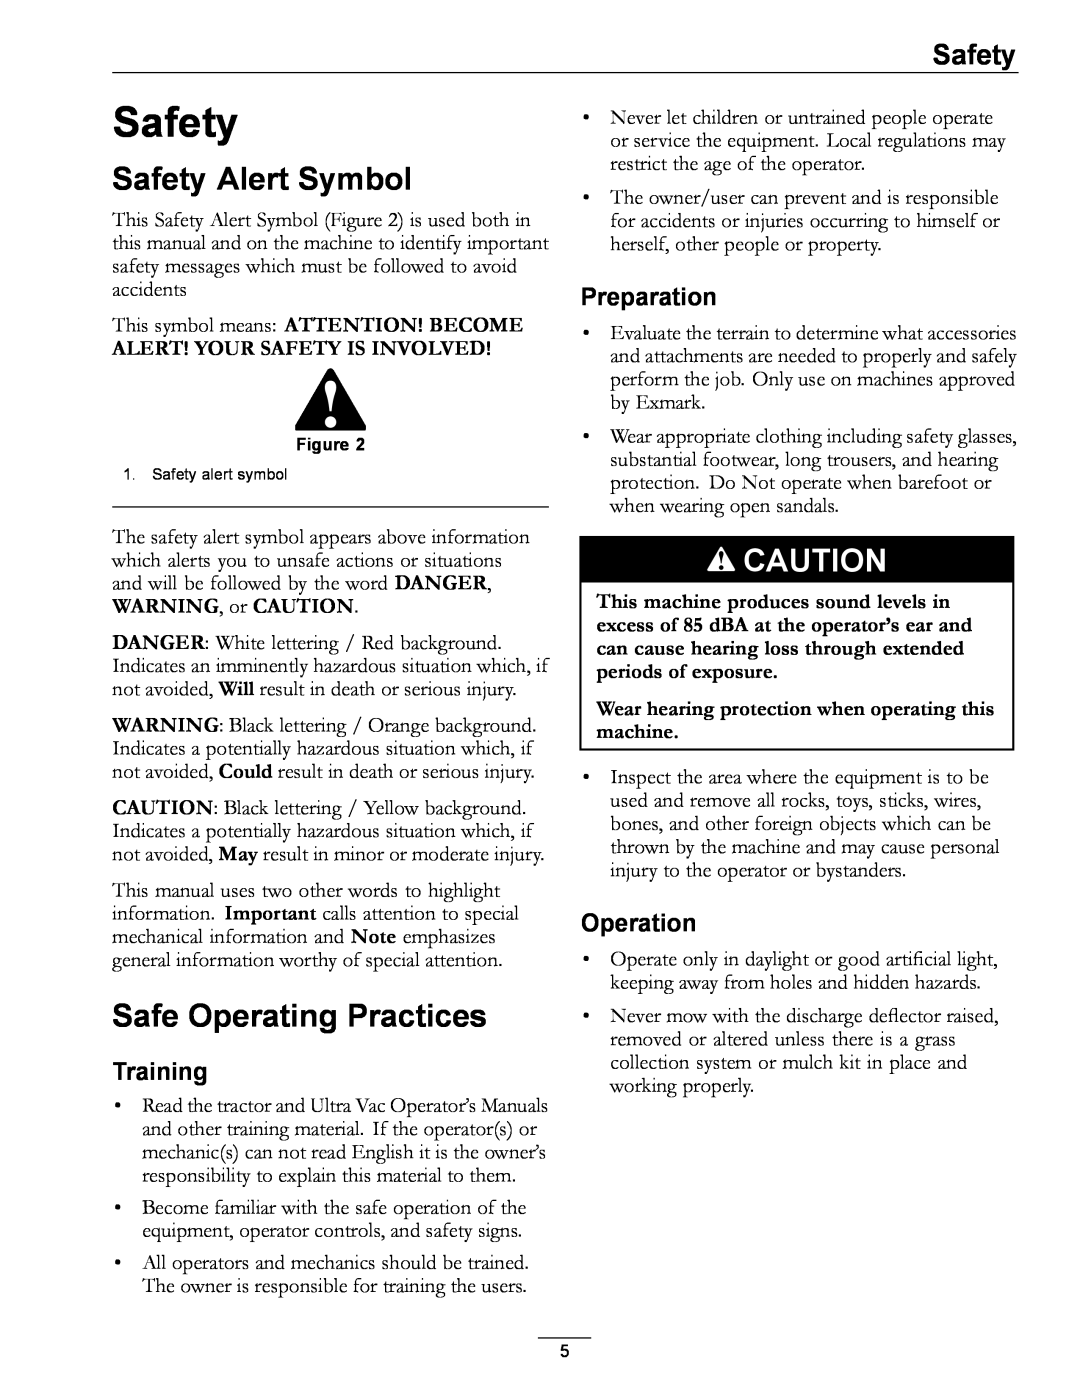 Exmark Lazer Z AS manual Safety Alert Symbol, Safe Operating Practices, Training, Preparation, Operation 